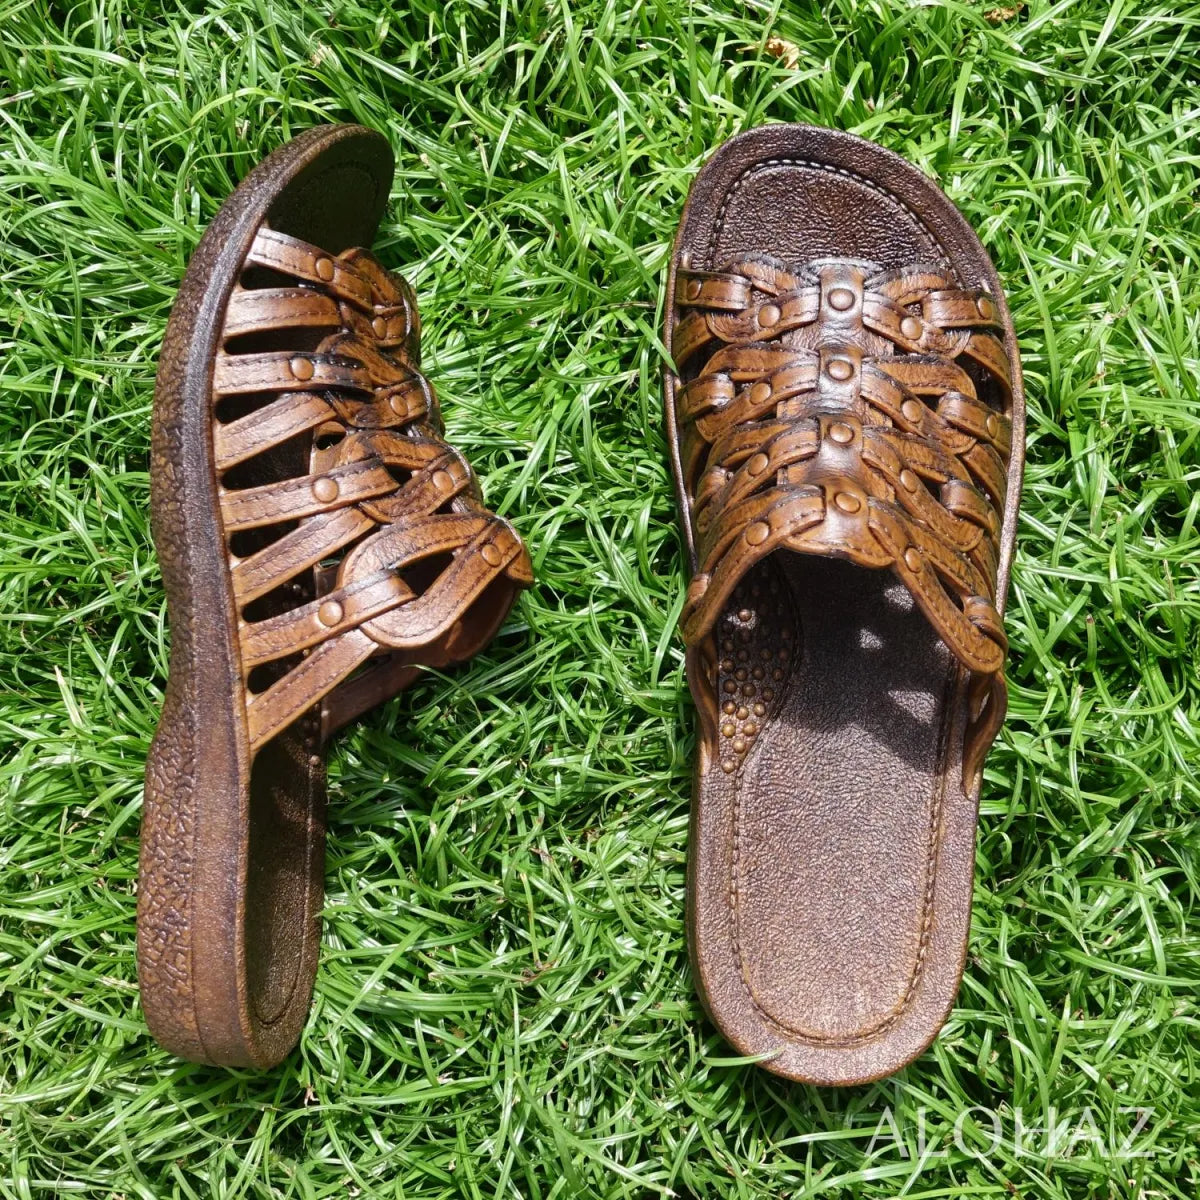 Brown tia™ pali hawaii sandals